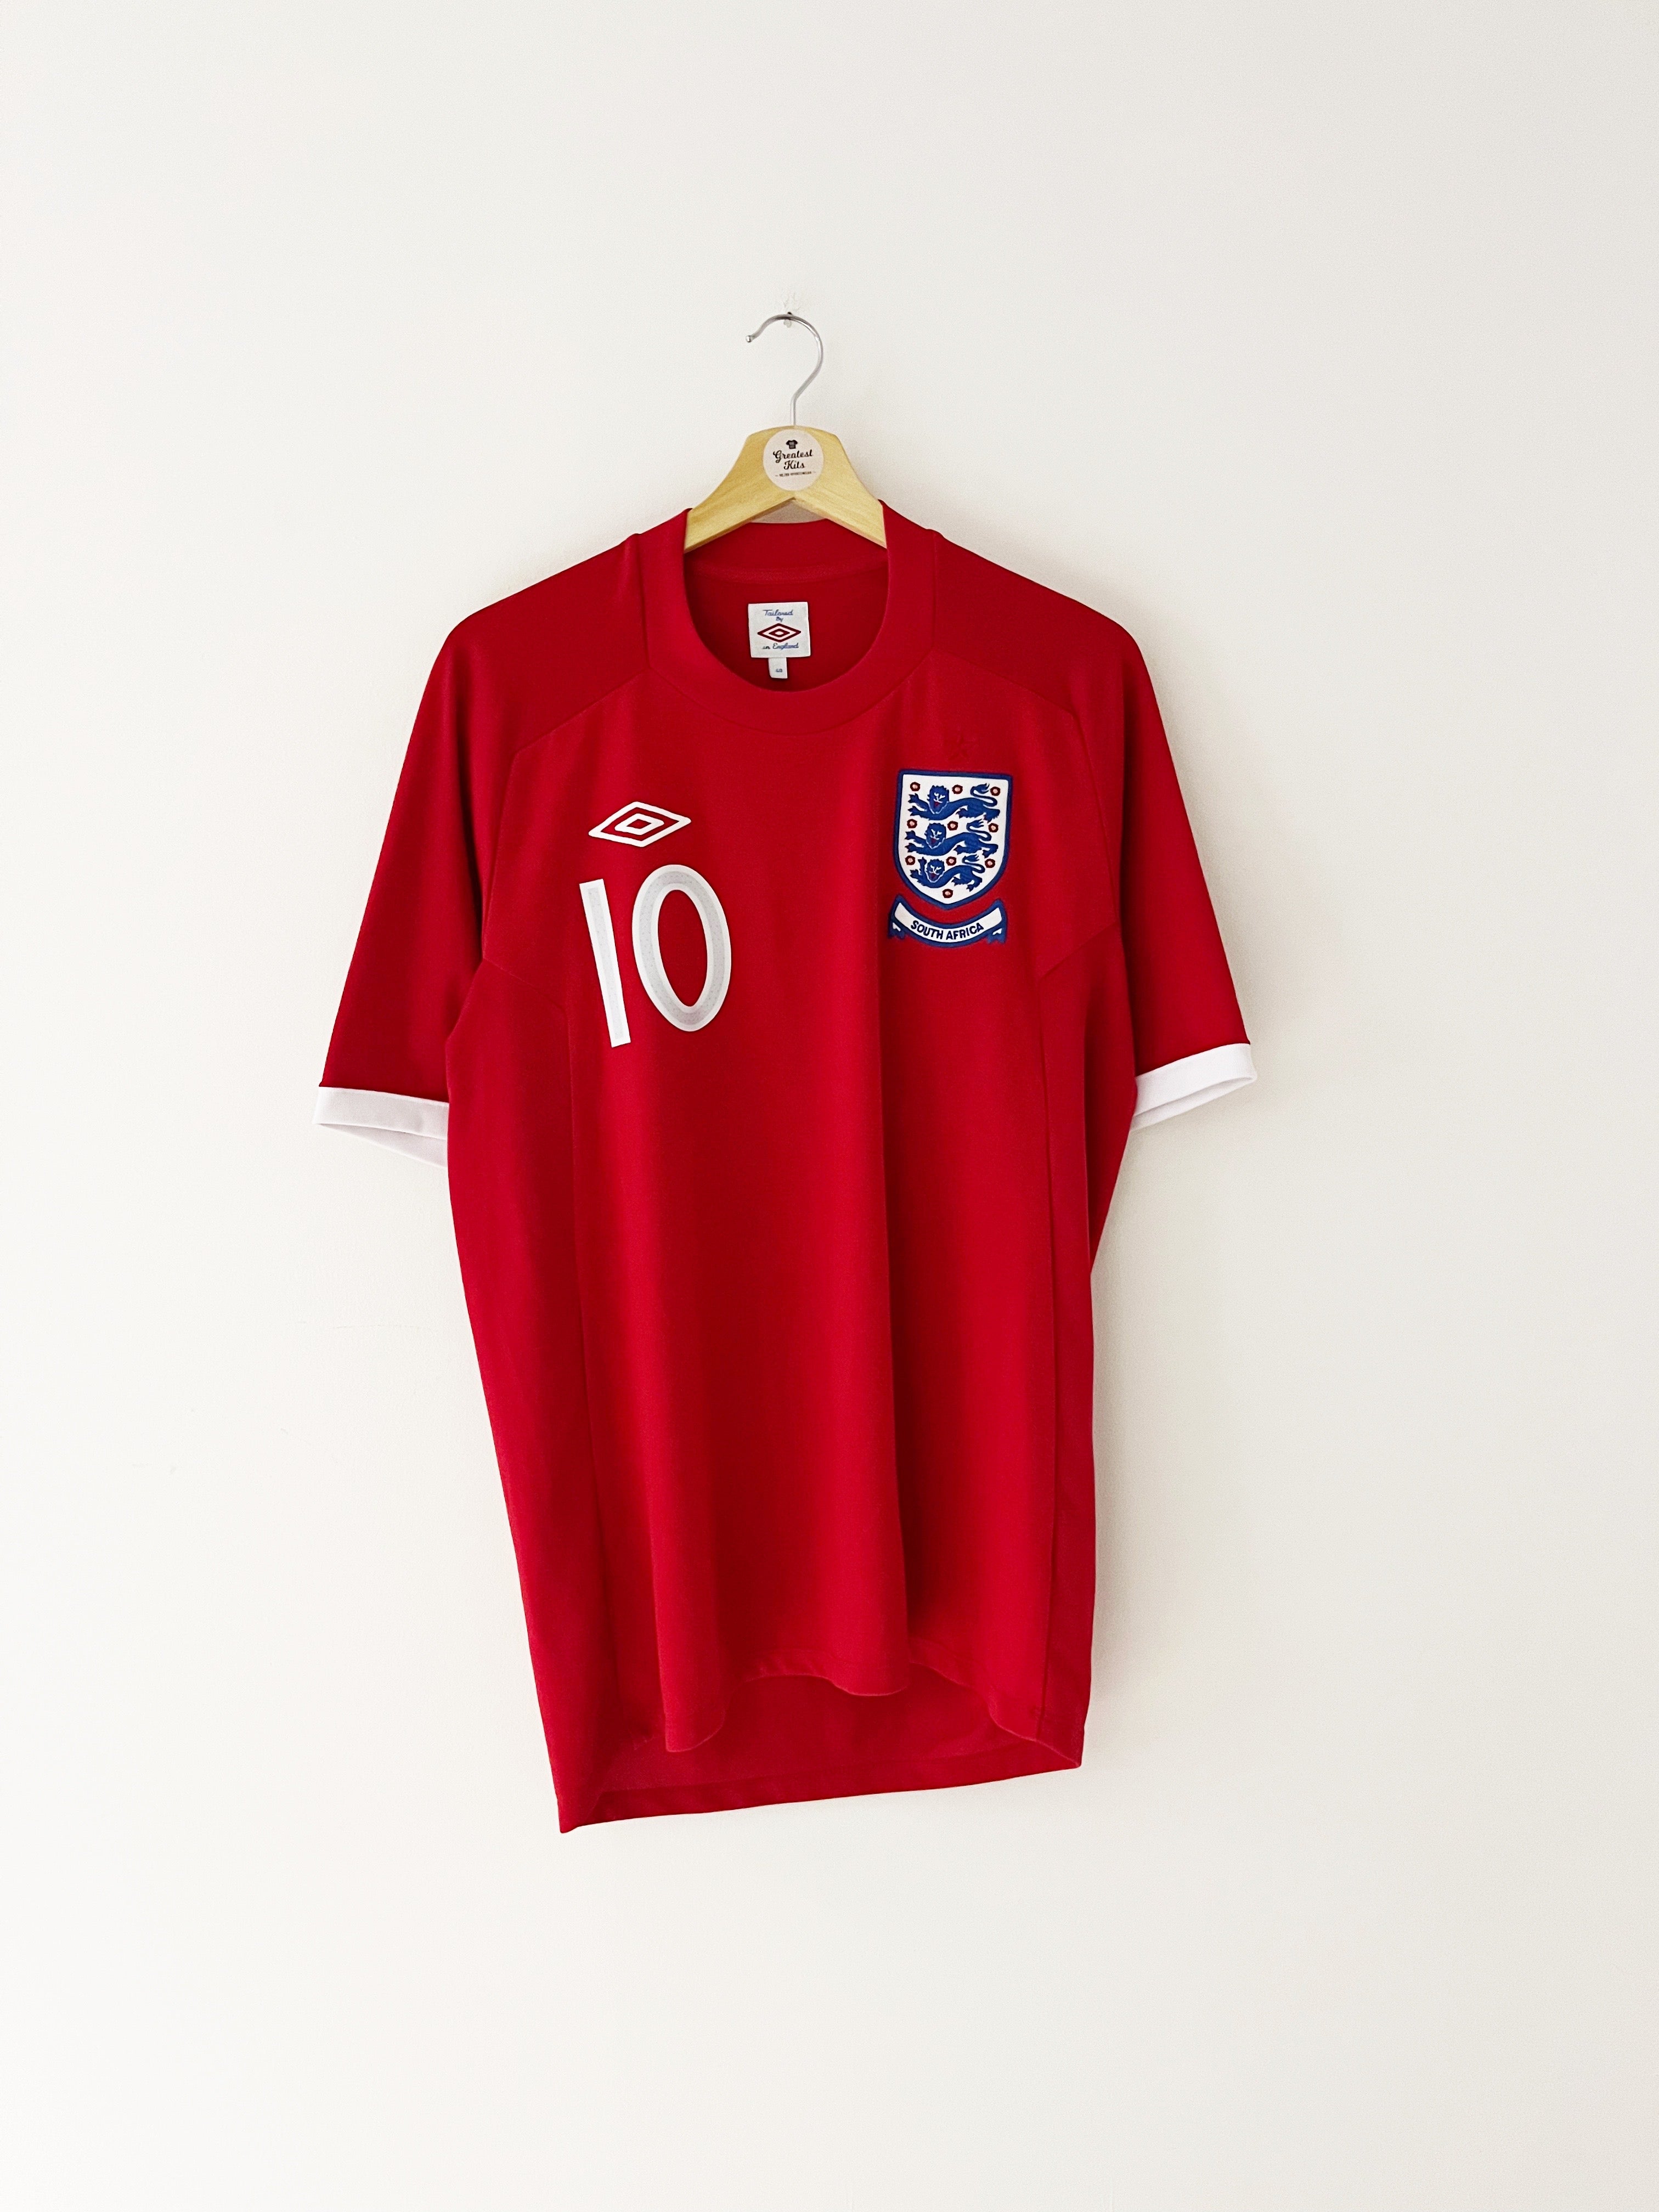 2010/11 England Away Shirt Rooney #10 (M) 9/10